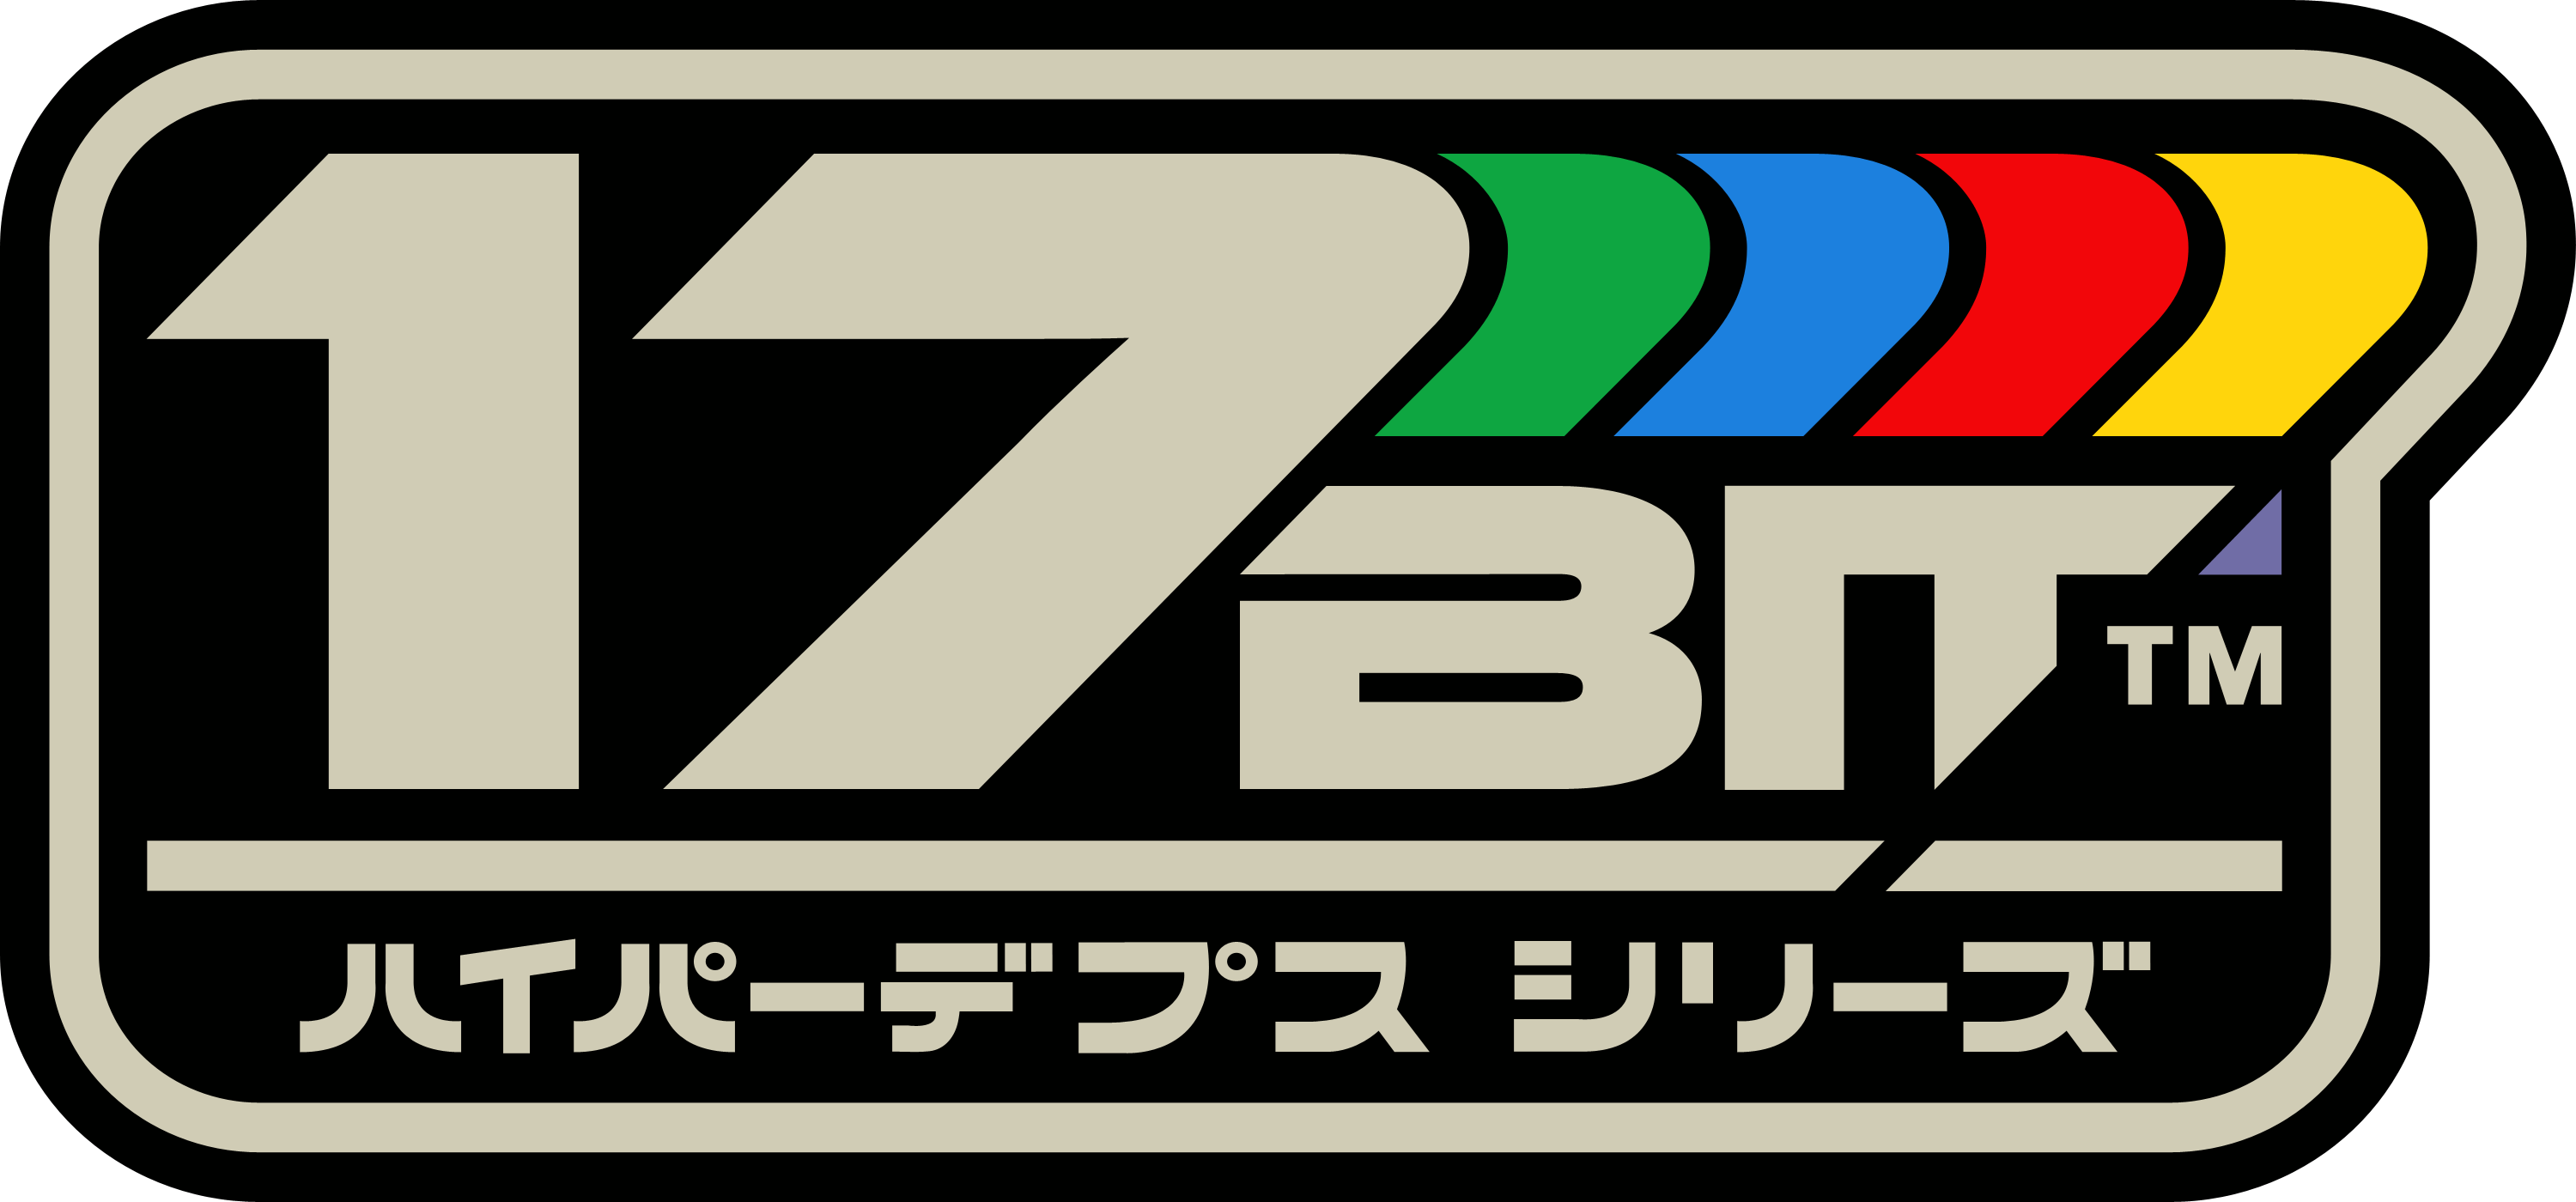 17 Logo - File:17-BIT logo rgb.png - Wikimedia Commons